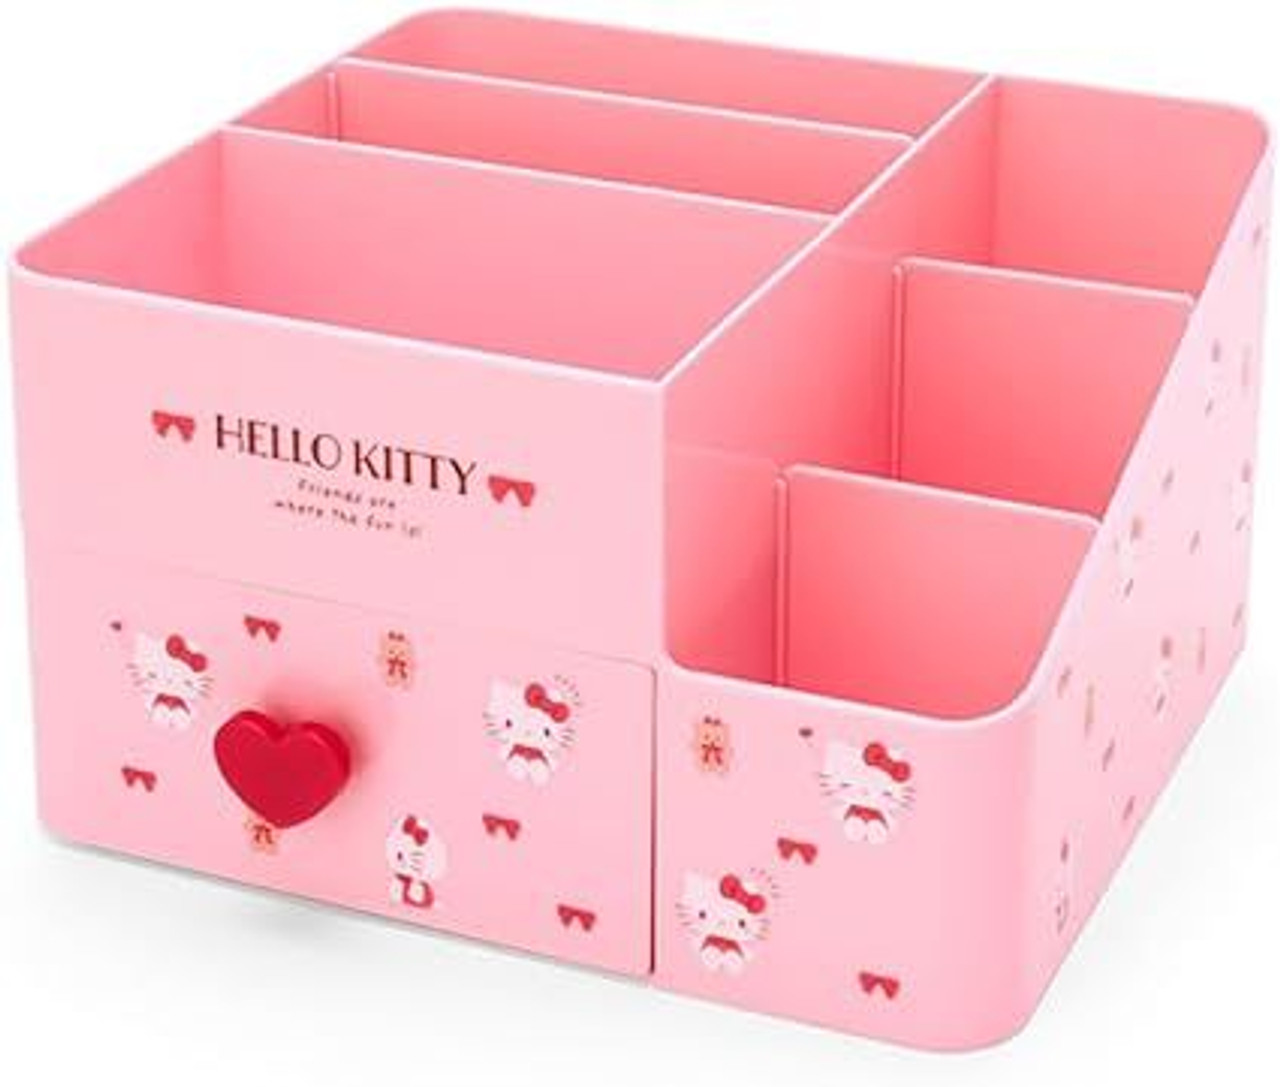 Hello Kitty Cosmetic and Makeup Storage Box Pink Sanrio